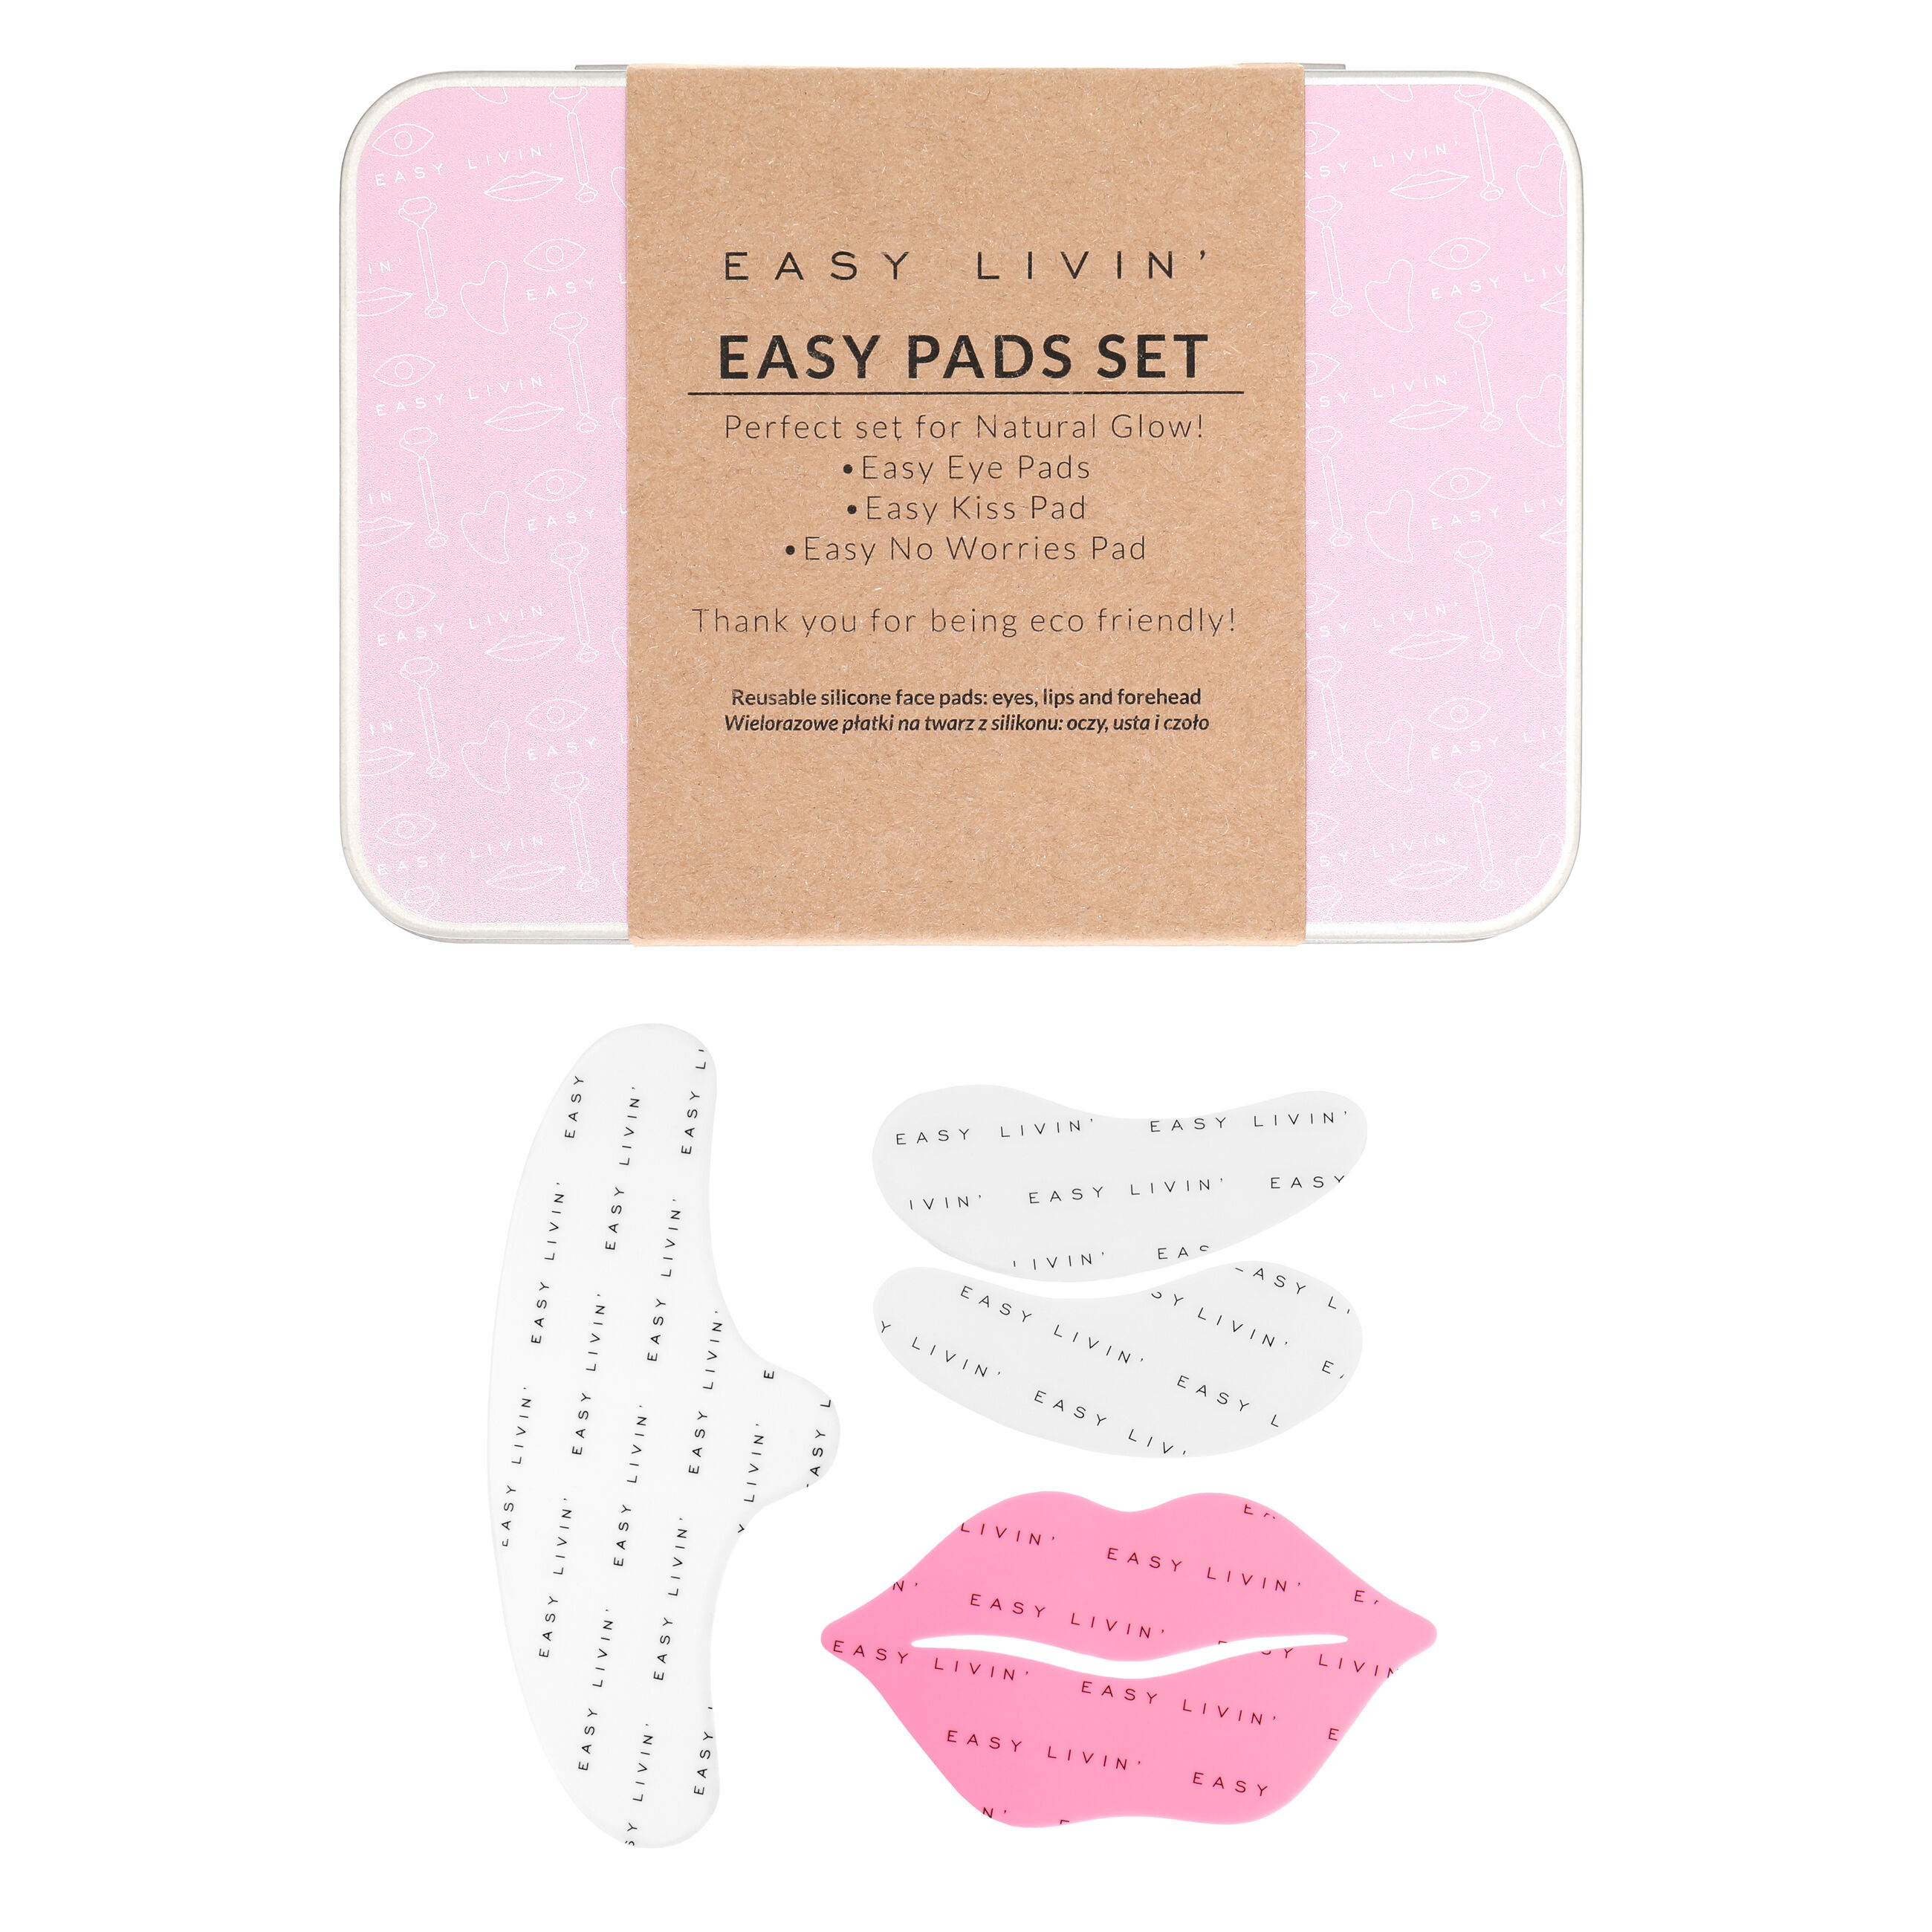 Easy Livin' Комплект Easy Pads: многоразовая подушечка для губ, 1 шт., многоразовая подушечка для лба, 1 шт., многоразовая подушечка для глаз, 2 шт. подушечка для глаз linseed олива